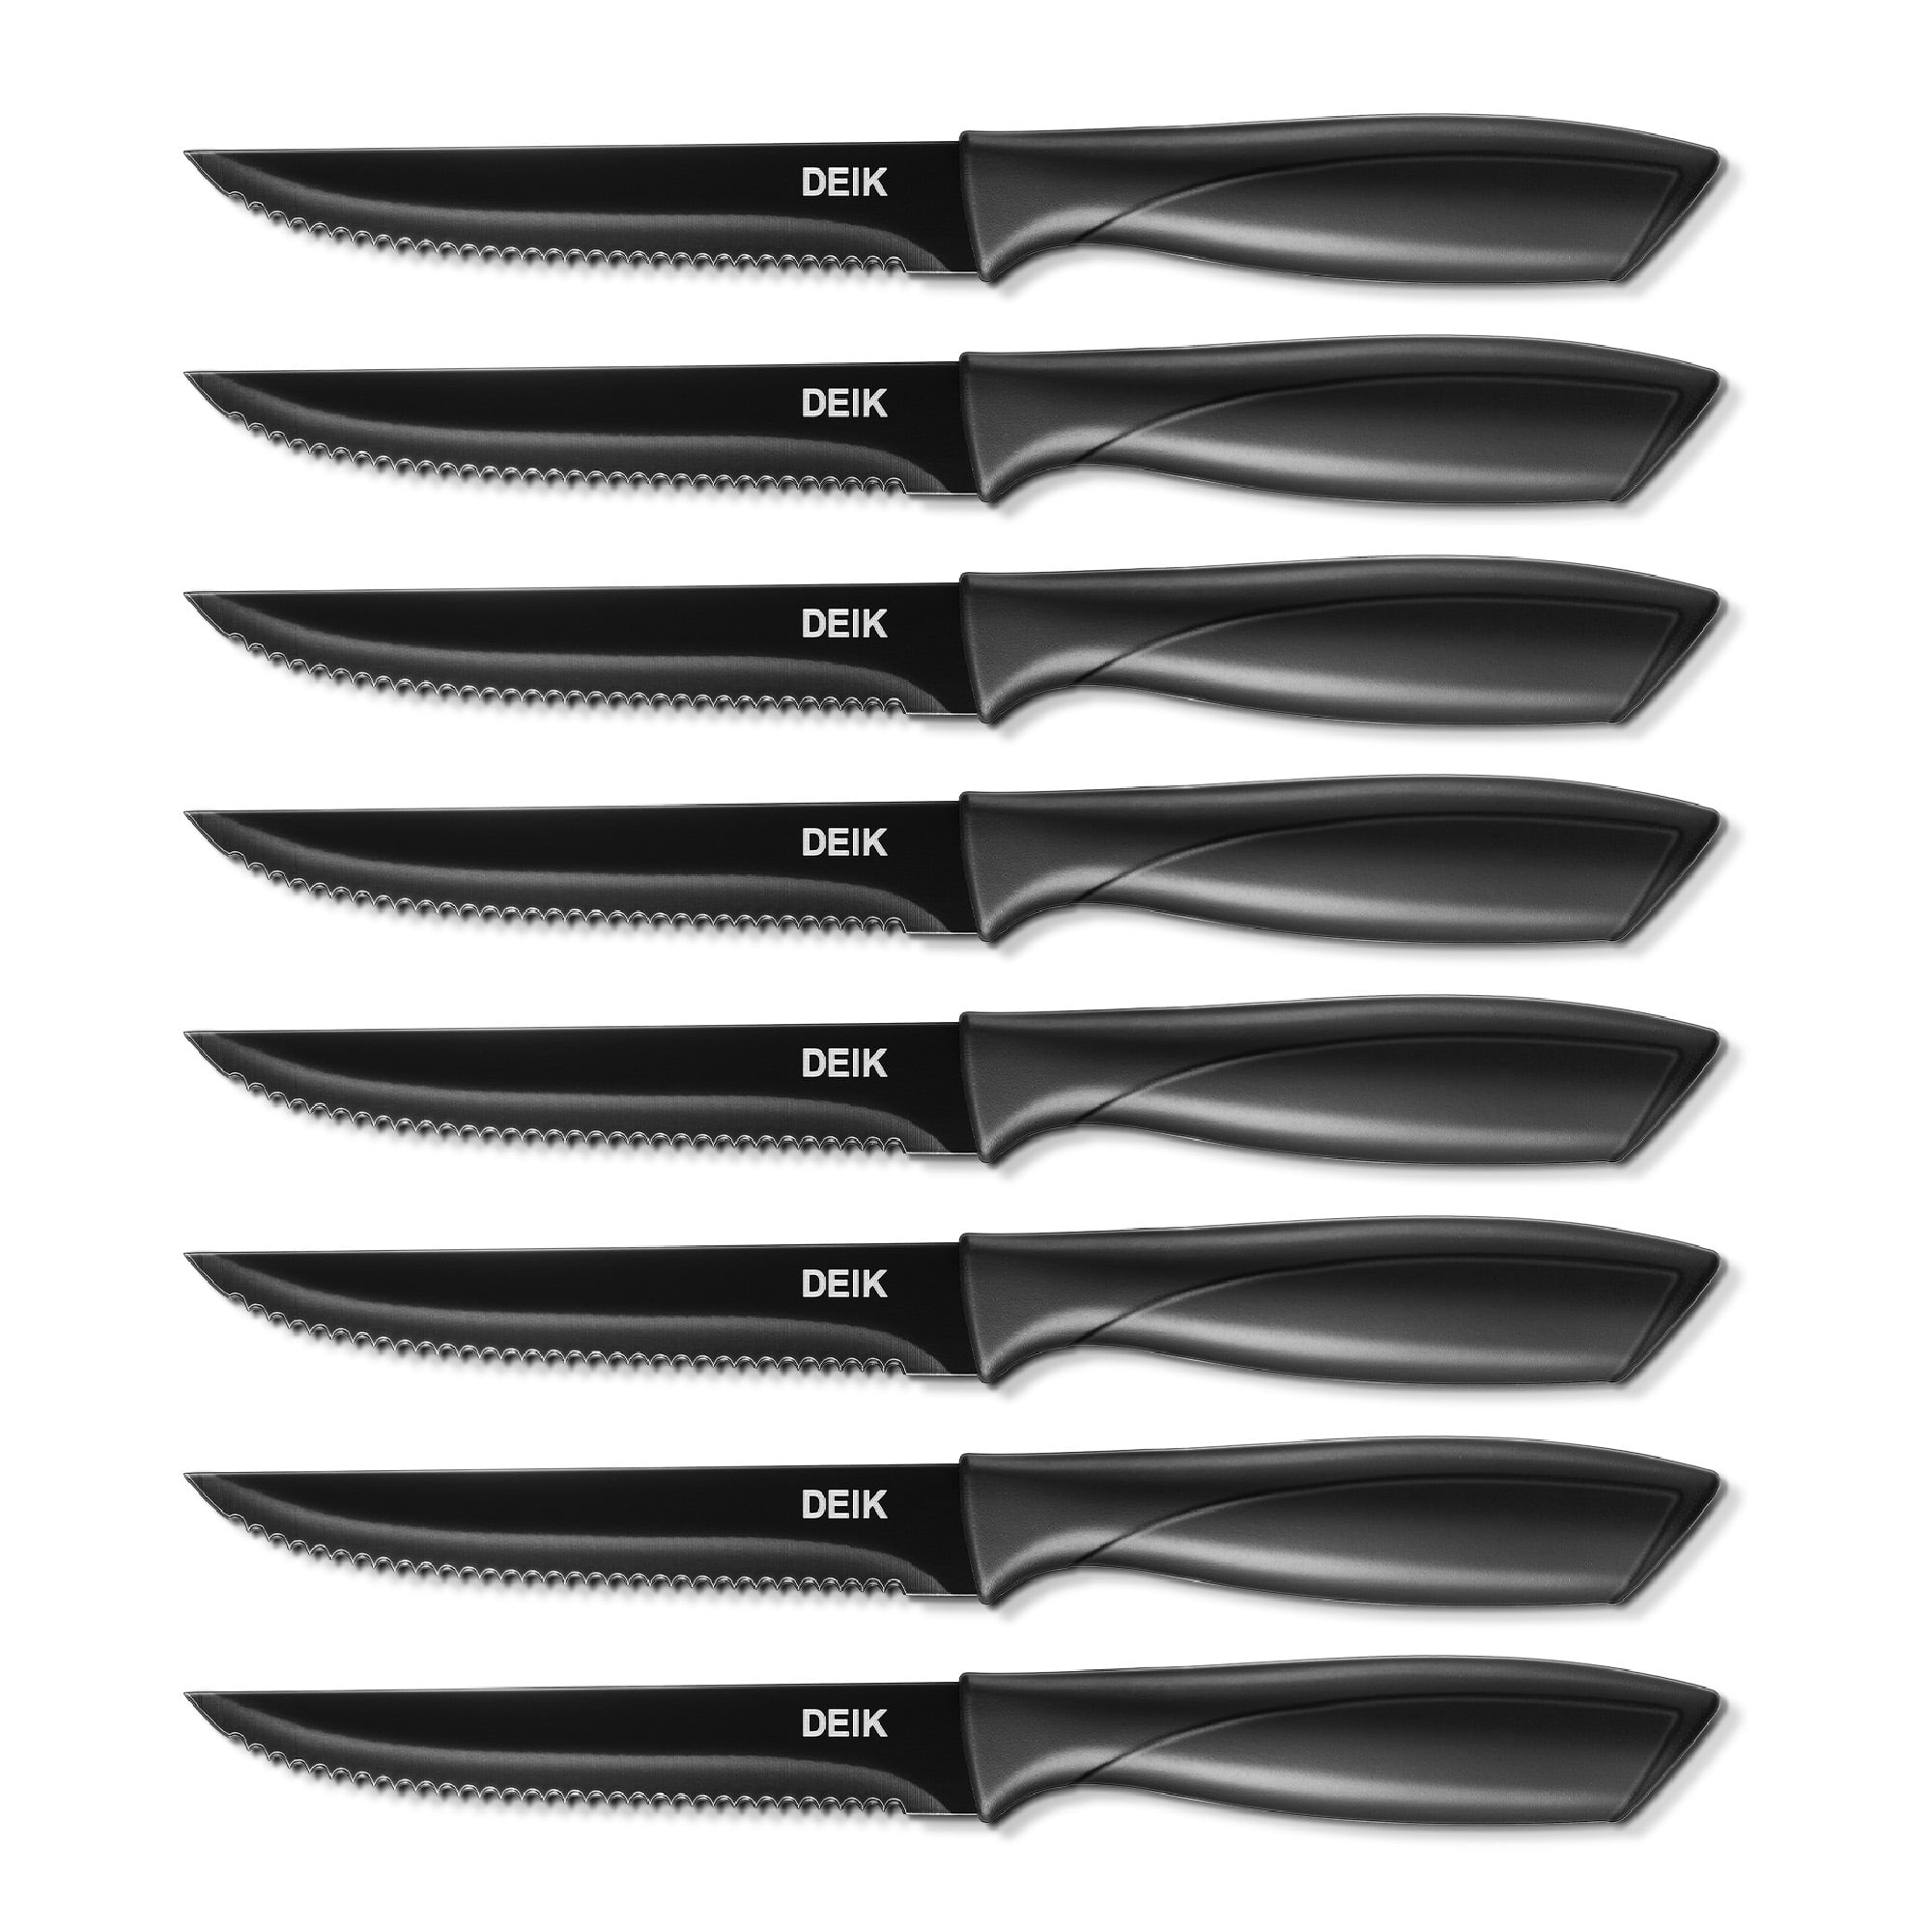 Deik Knife set, 16 Pieces Black Kitchen Knife set with Acrylic Stand 